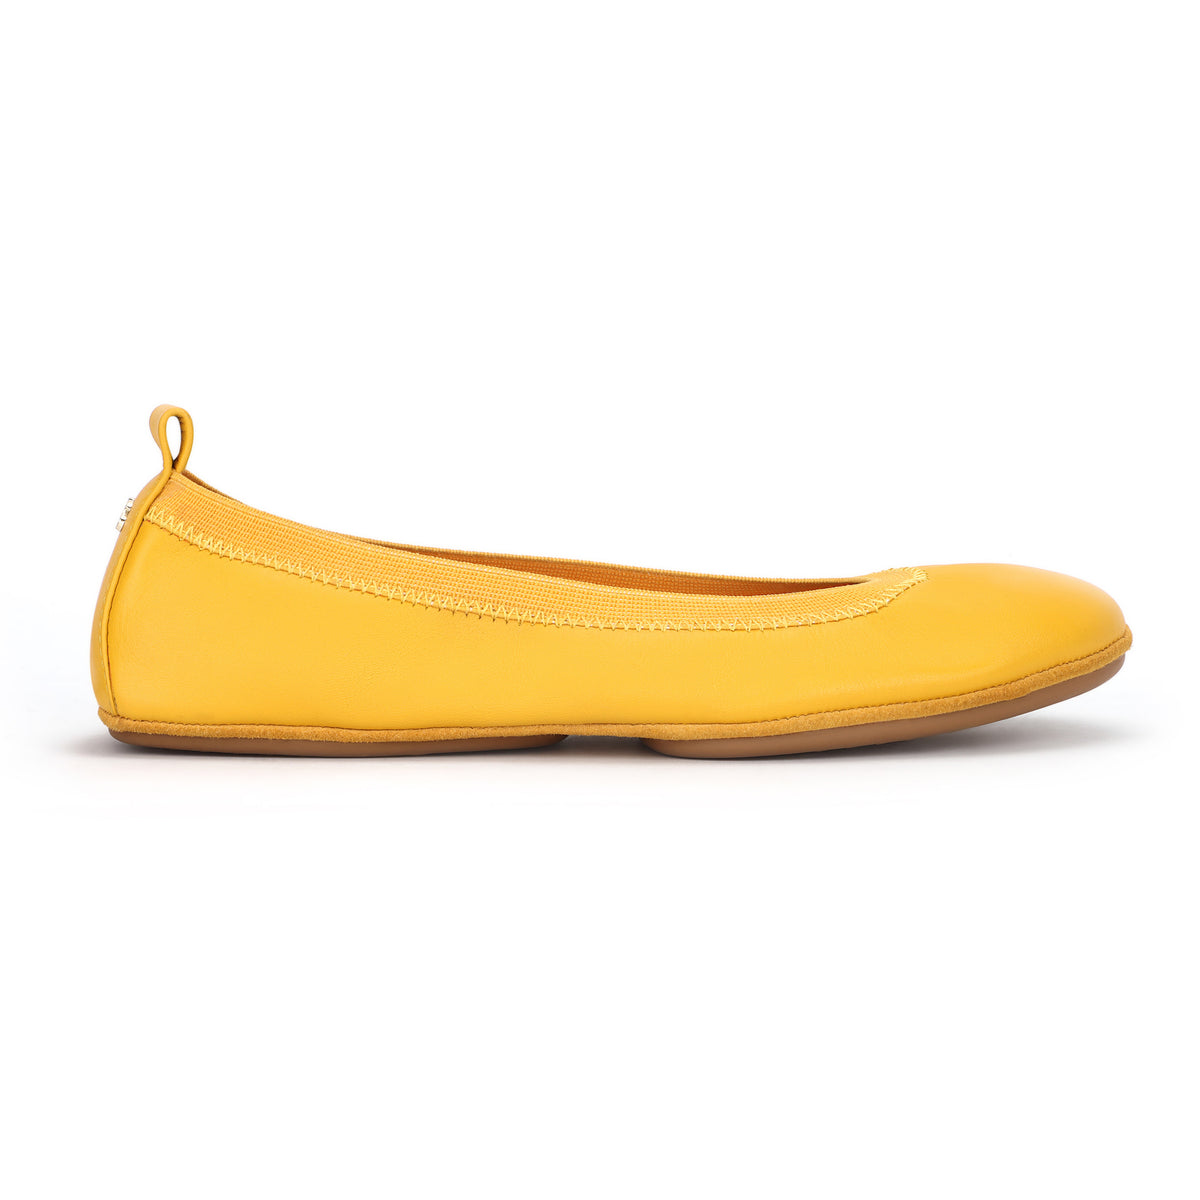 Samara Foldable Ballet Flat in Mustard Yellow Leather